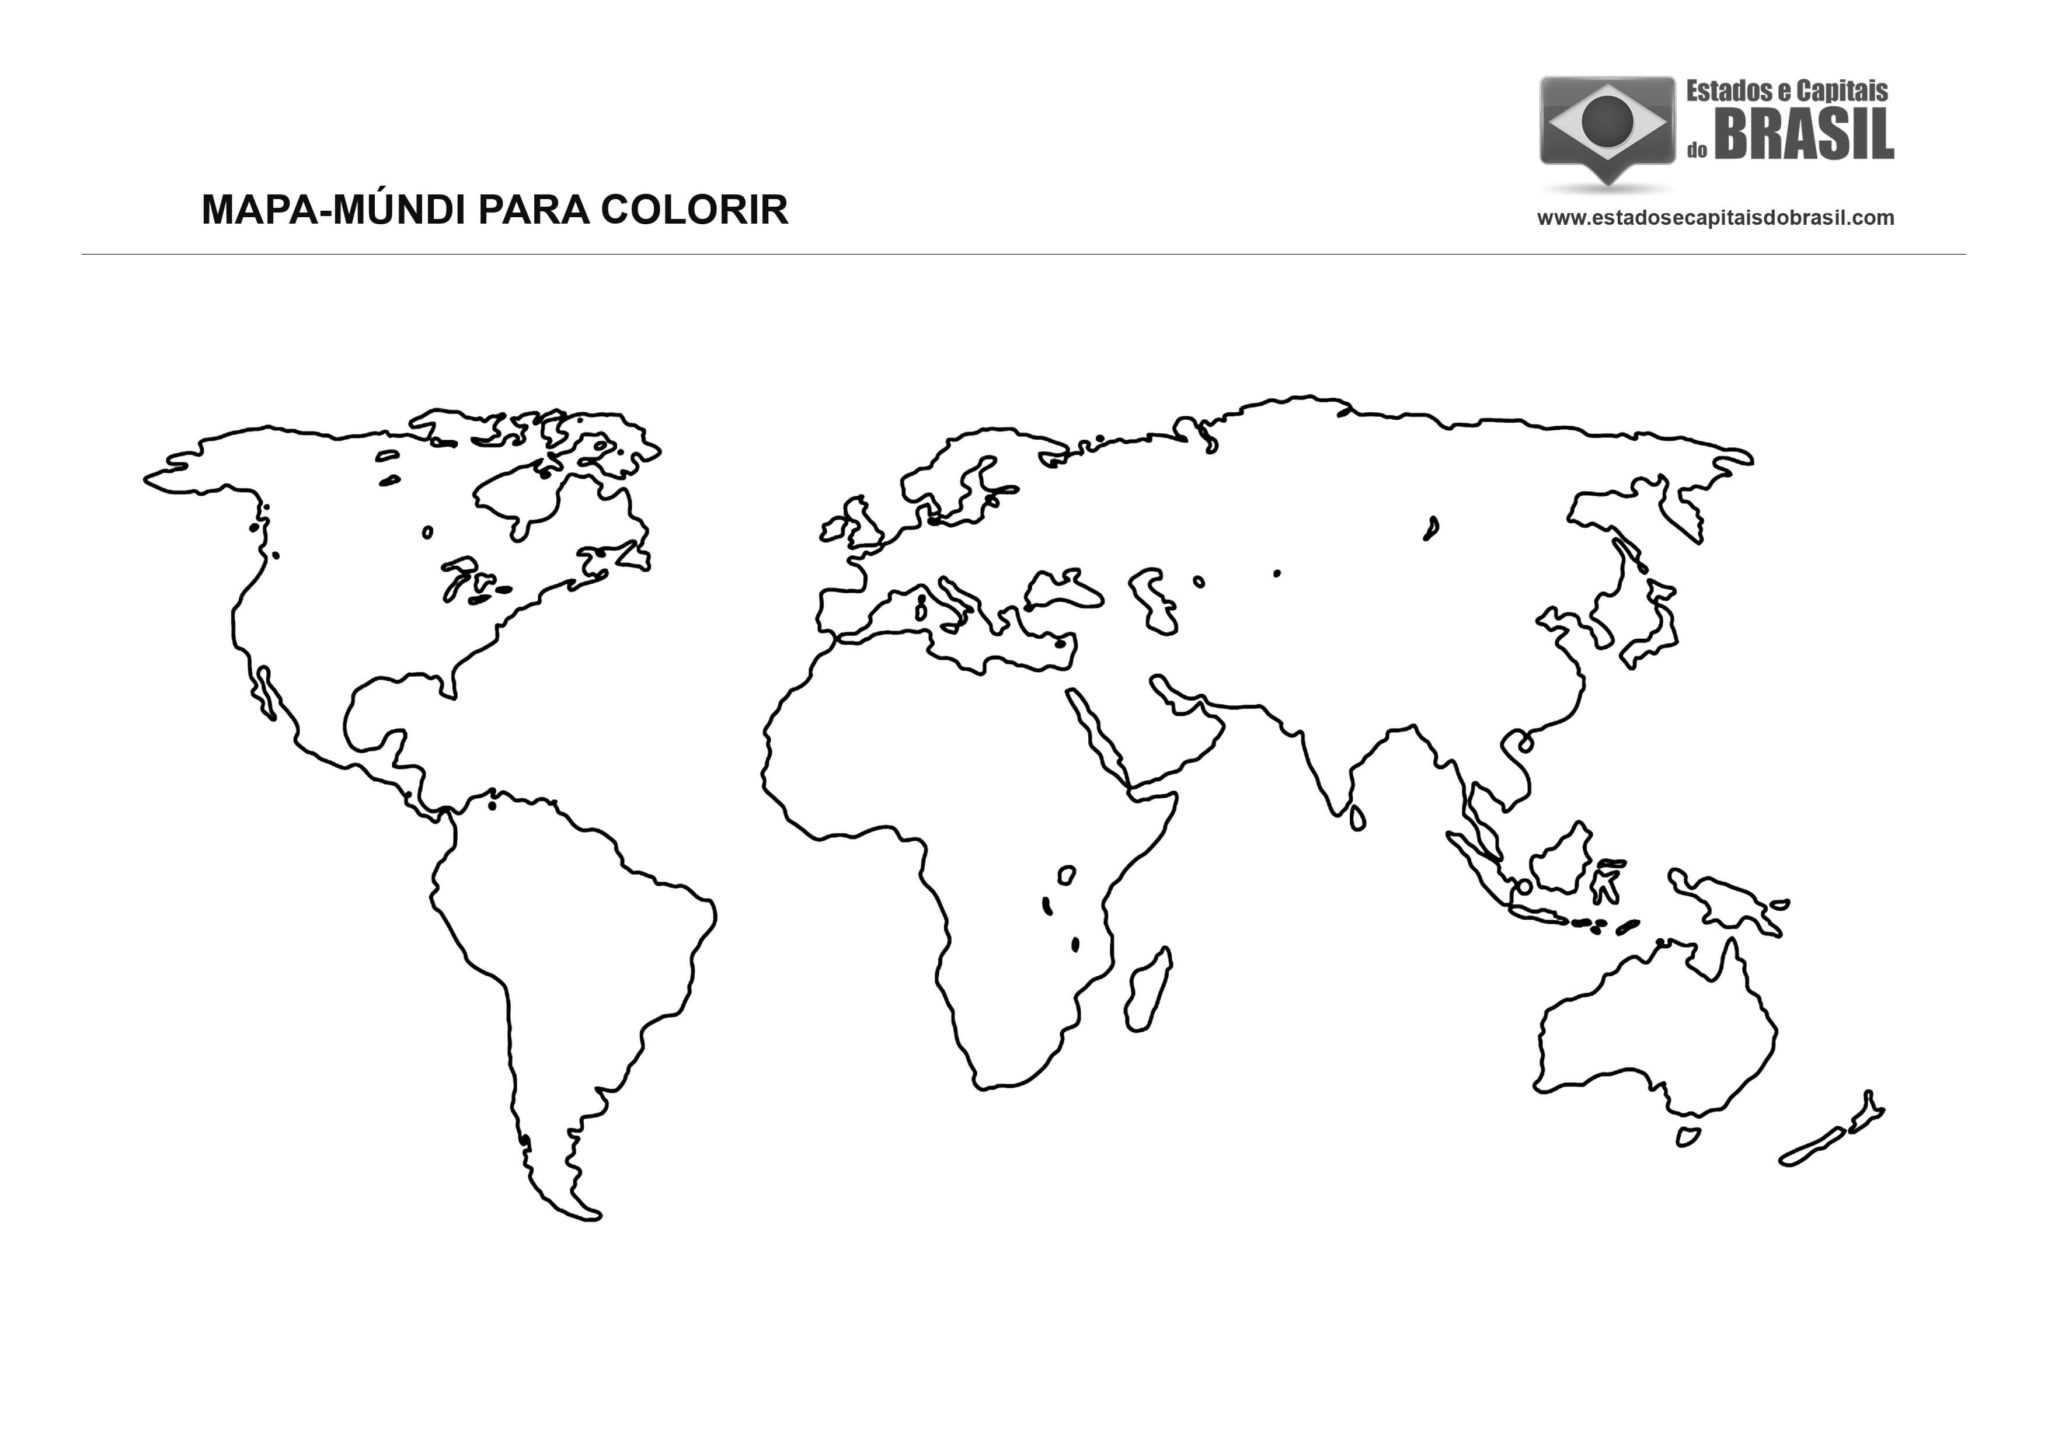 Mapa-Múndi para colorir (continentes)